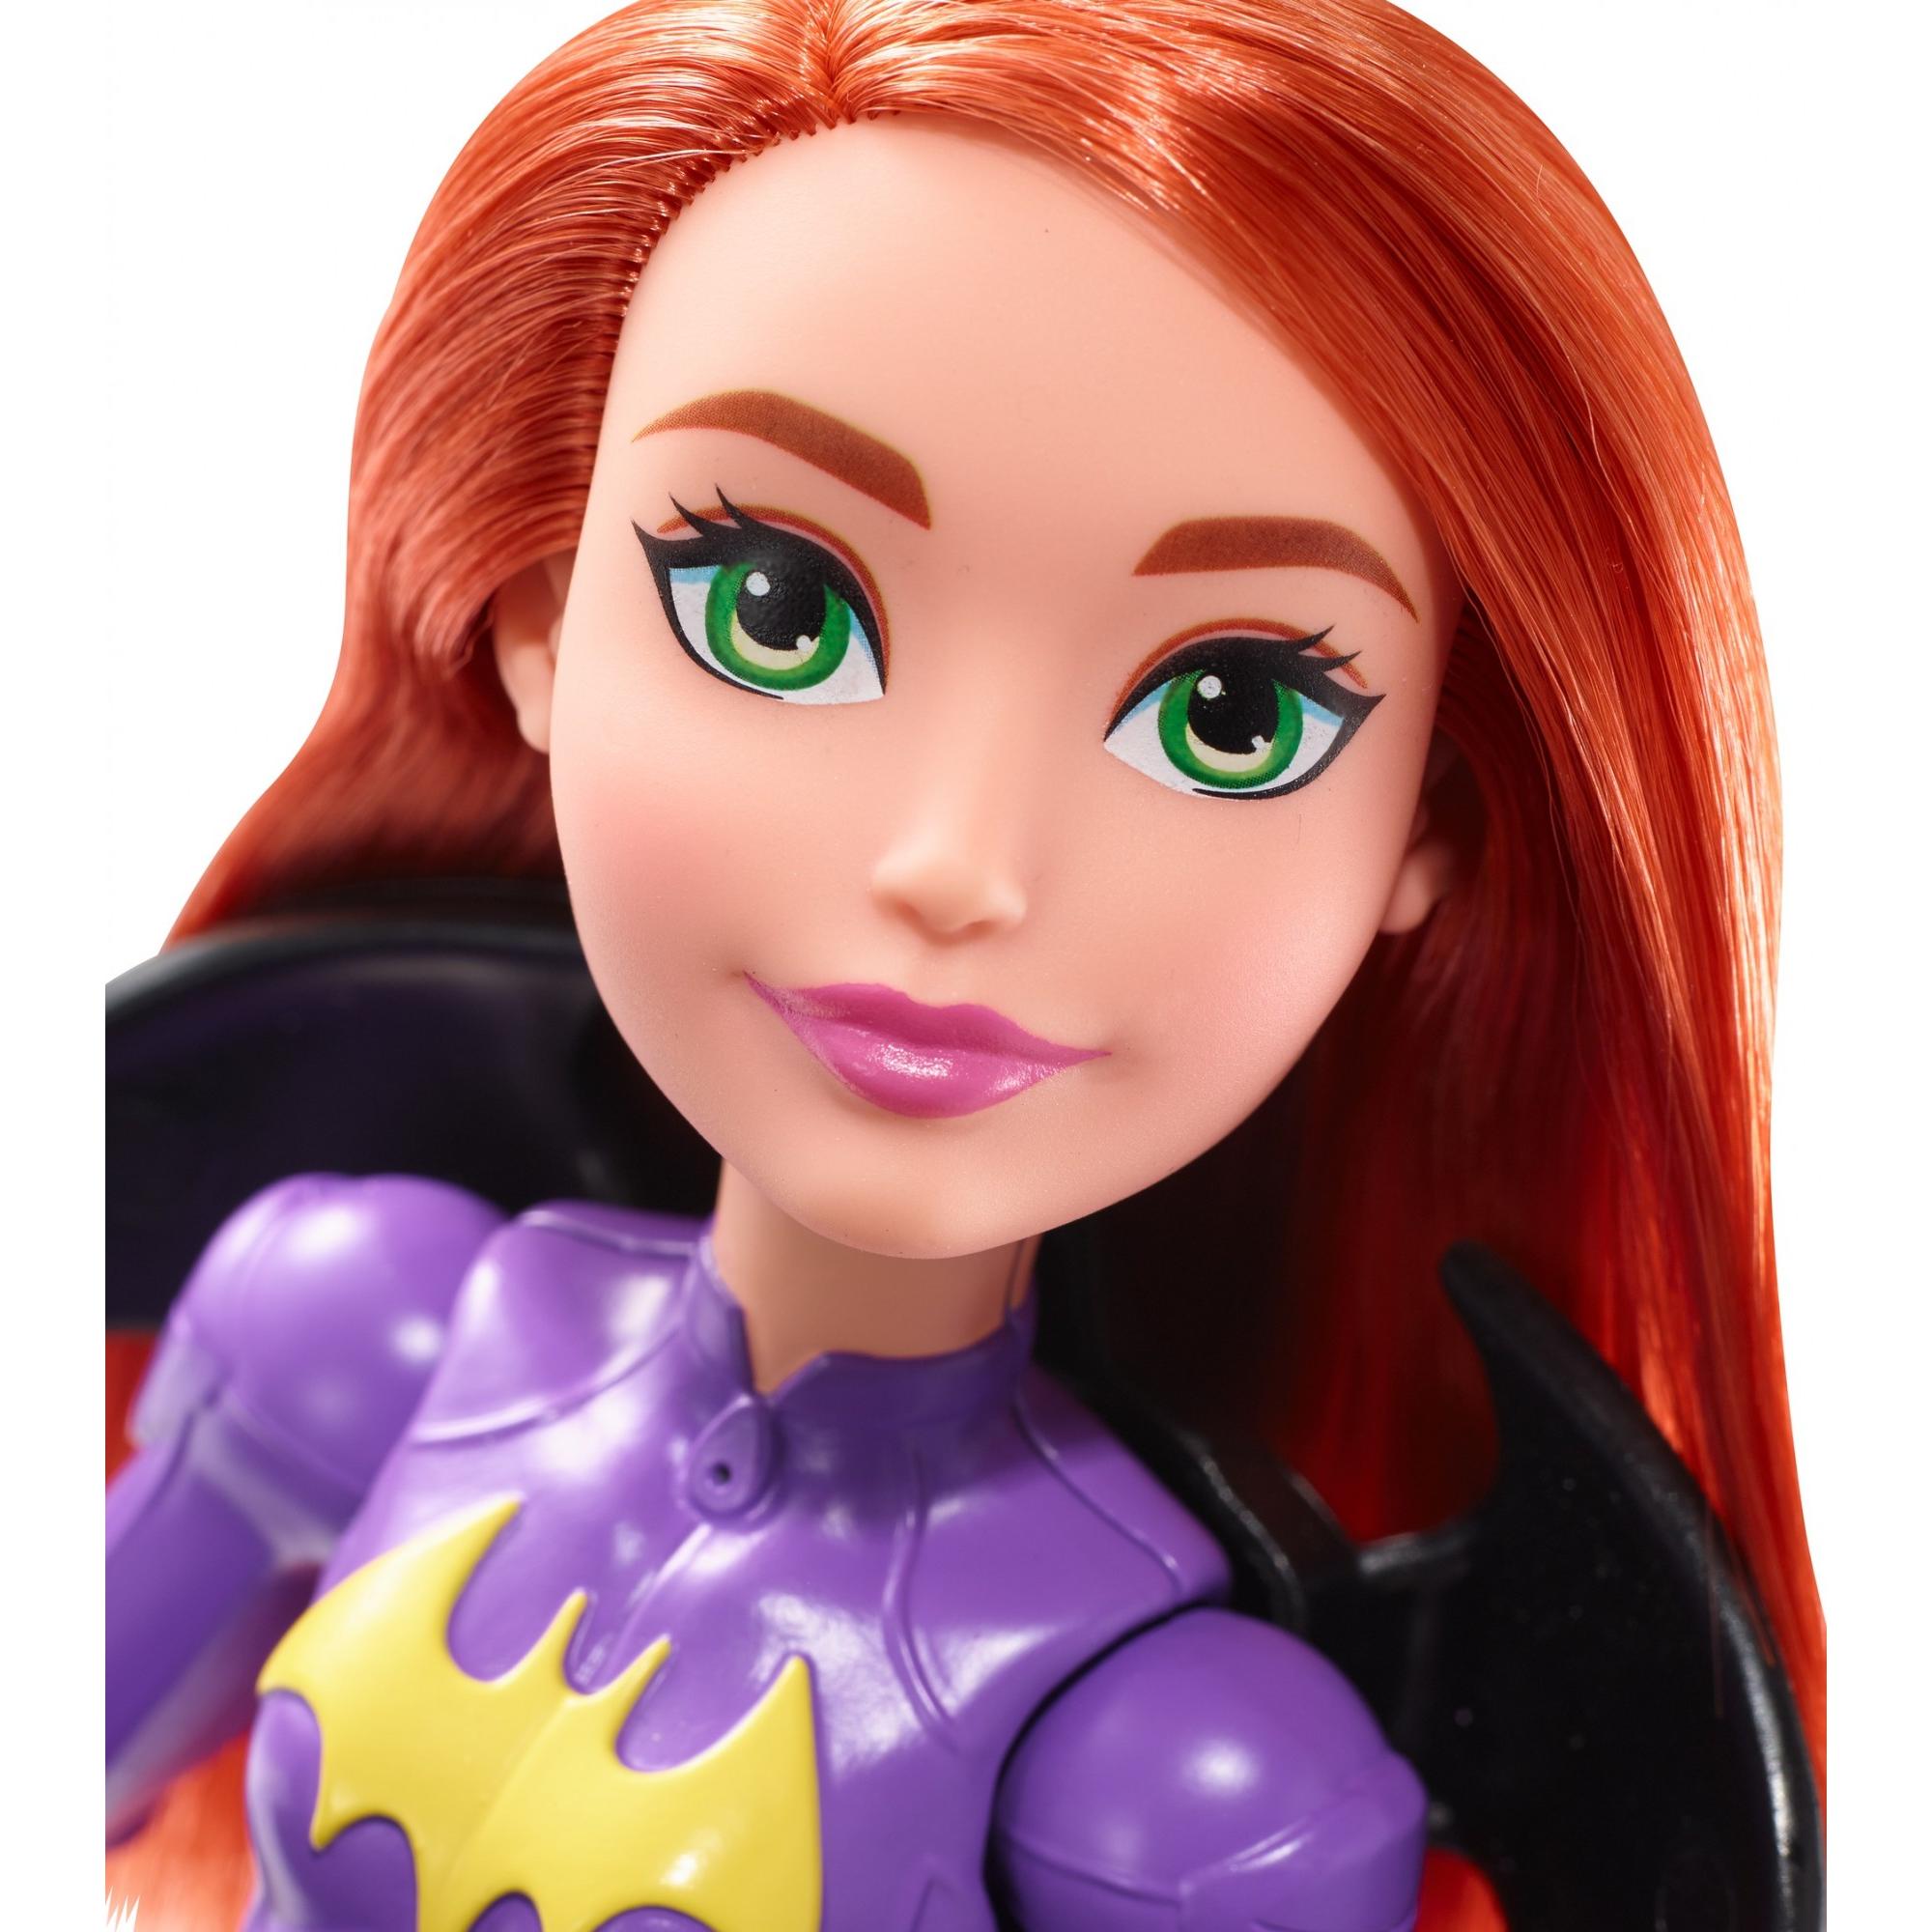 DC Super Hero Girls Batgirl Doll and Batcycle Vehicle Set - image 5 of 12